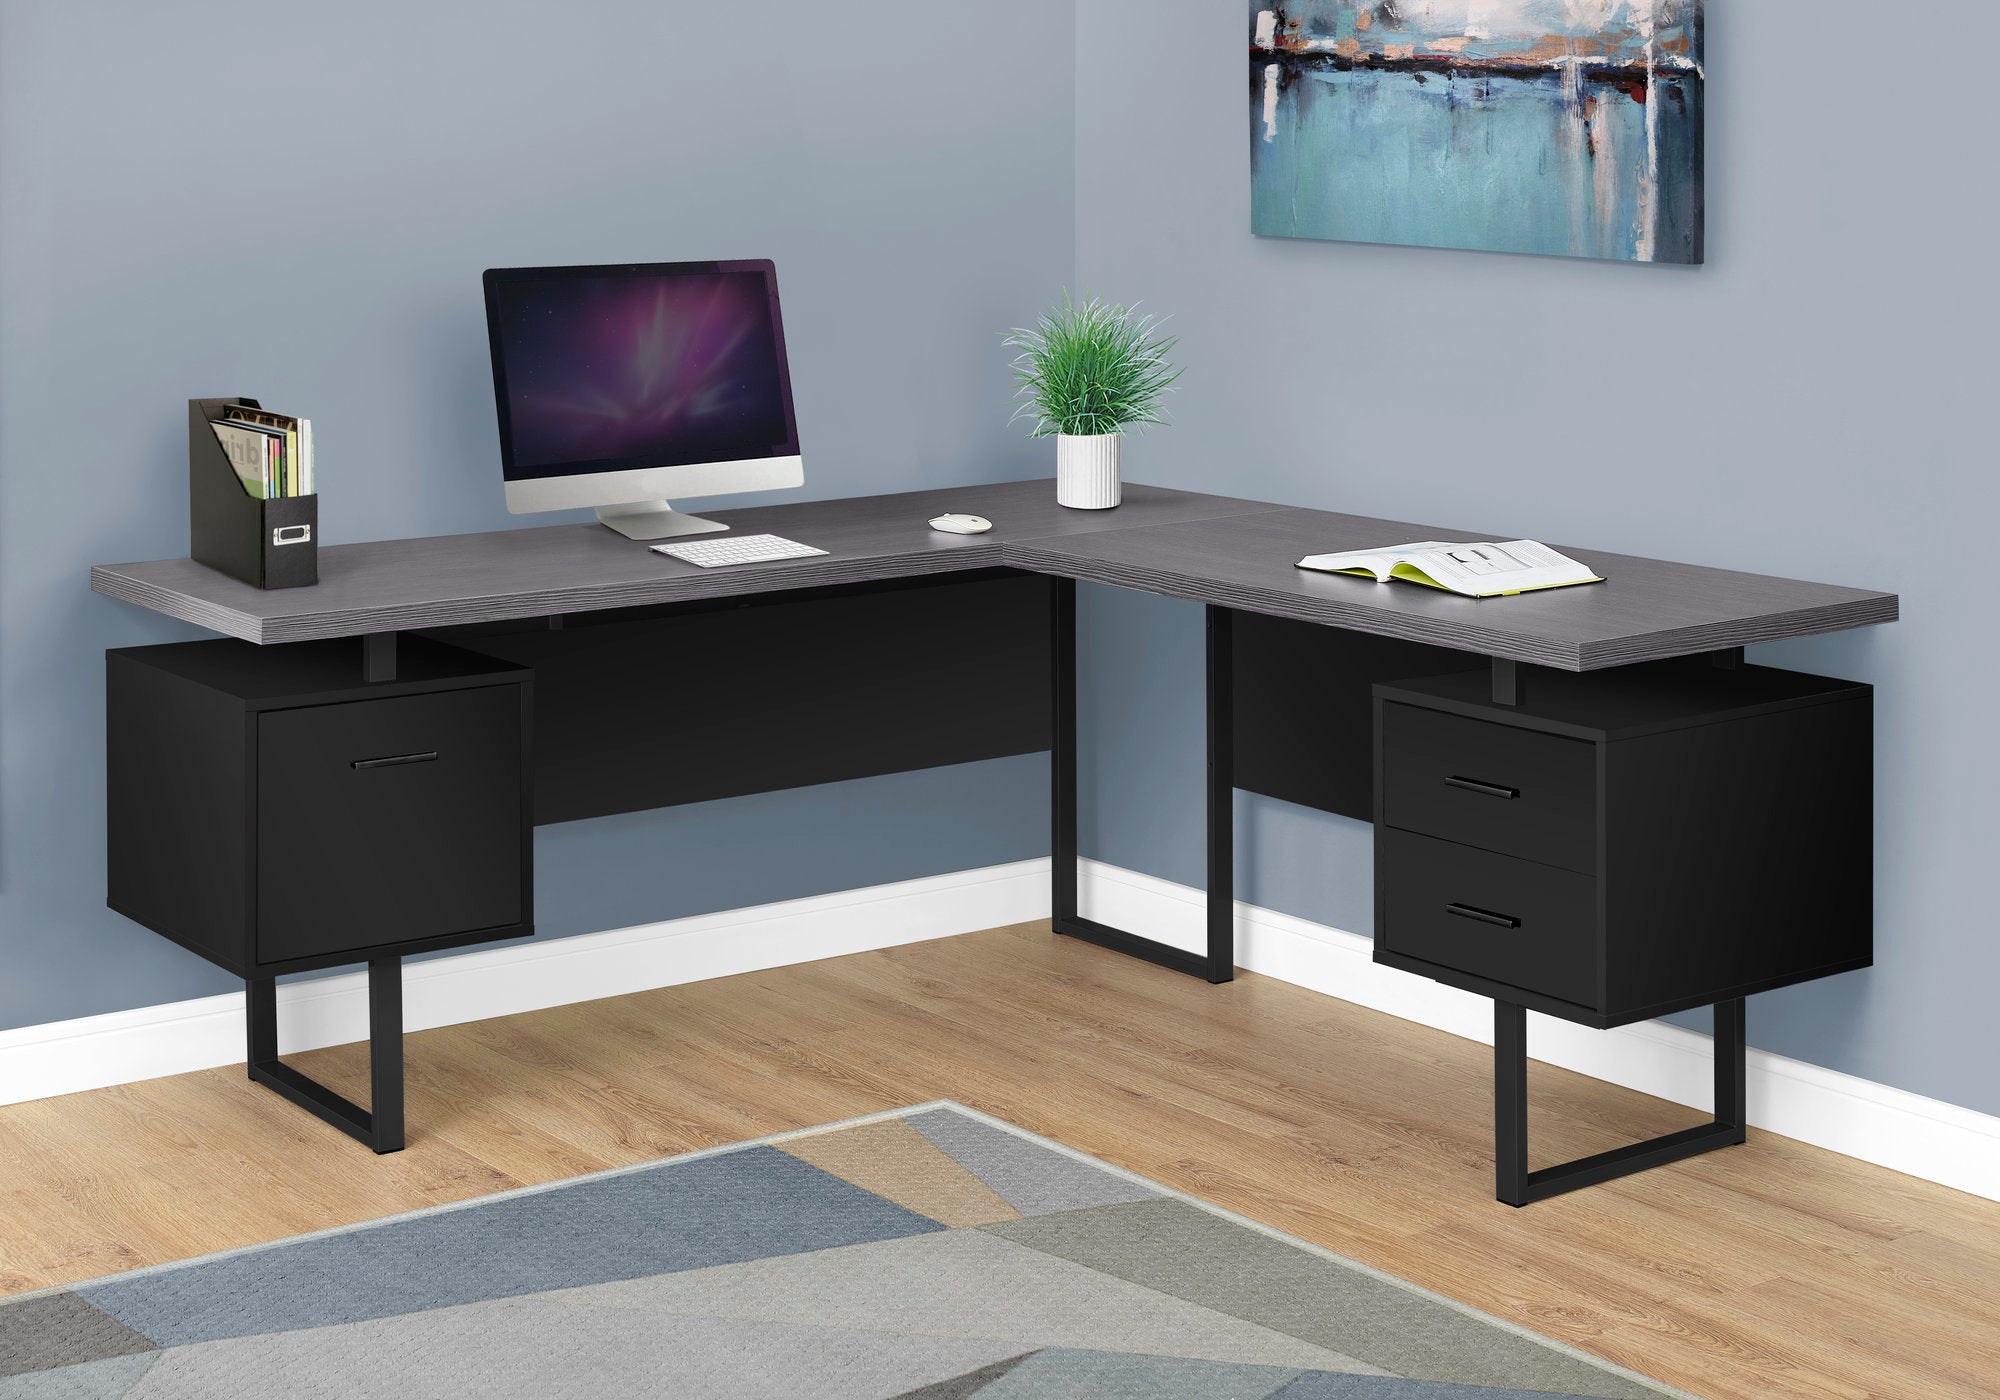 MN-957432    Computer Desk, Home Office, Corner, Left, Right Set-Up, Storage Drawers, 70"L, L Shape, Metal, Laminate, Black, Grey, Contemporary, Modern